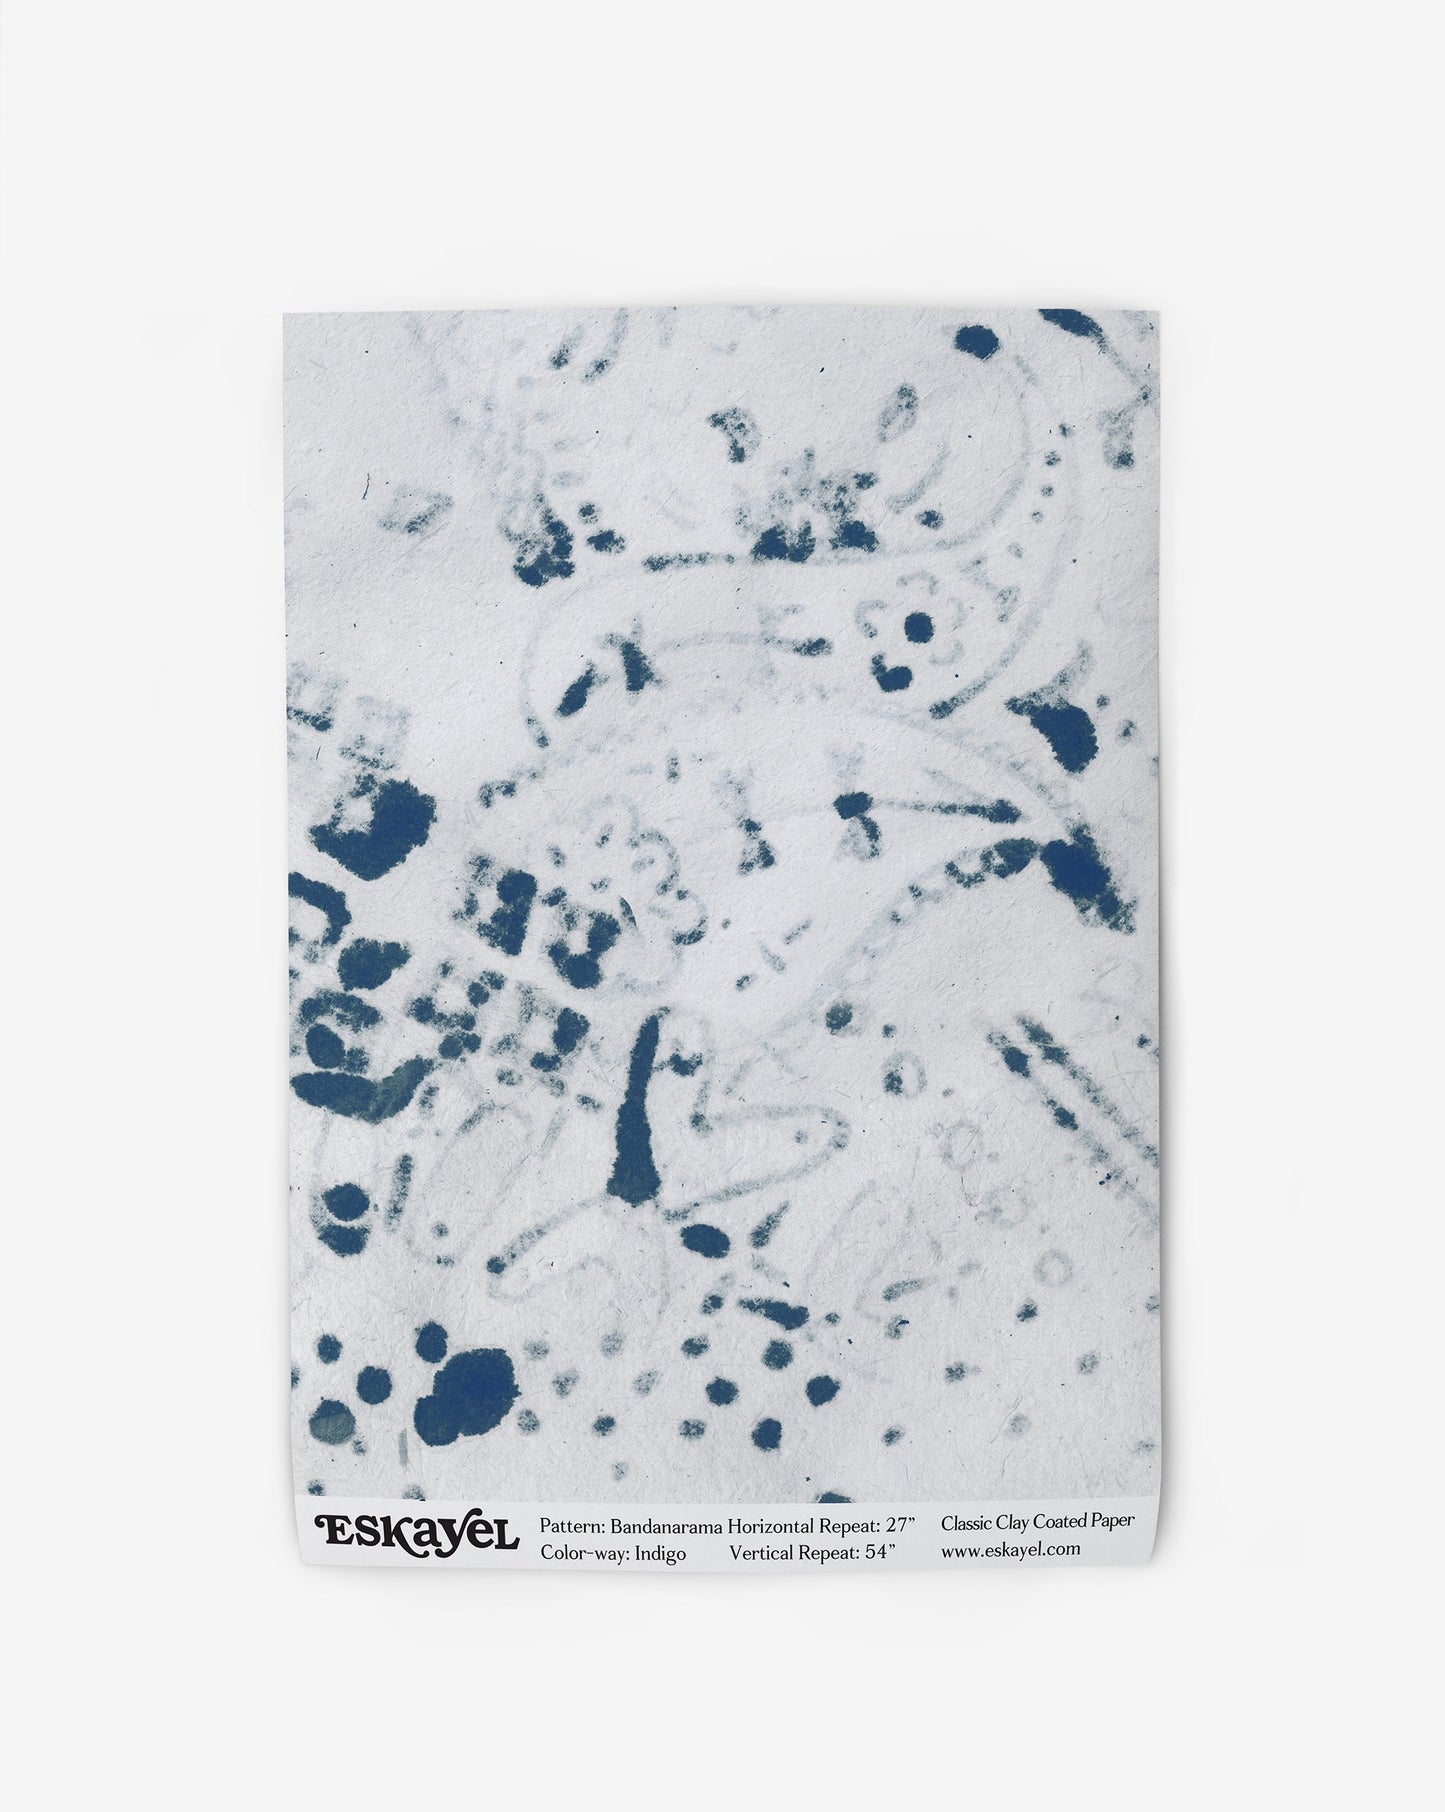 A Bandanarama Wallpaper Sample||Indigo towel with a pattern on it.